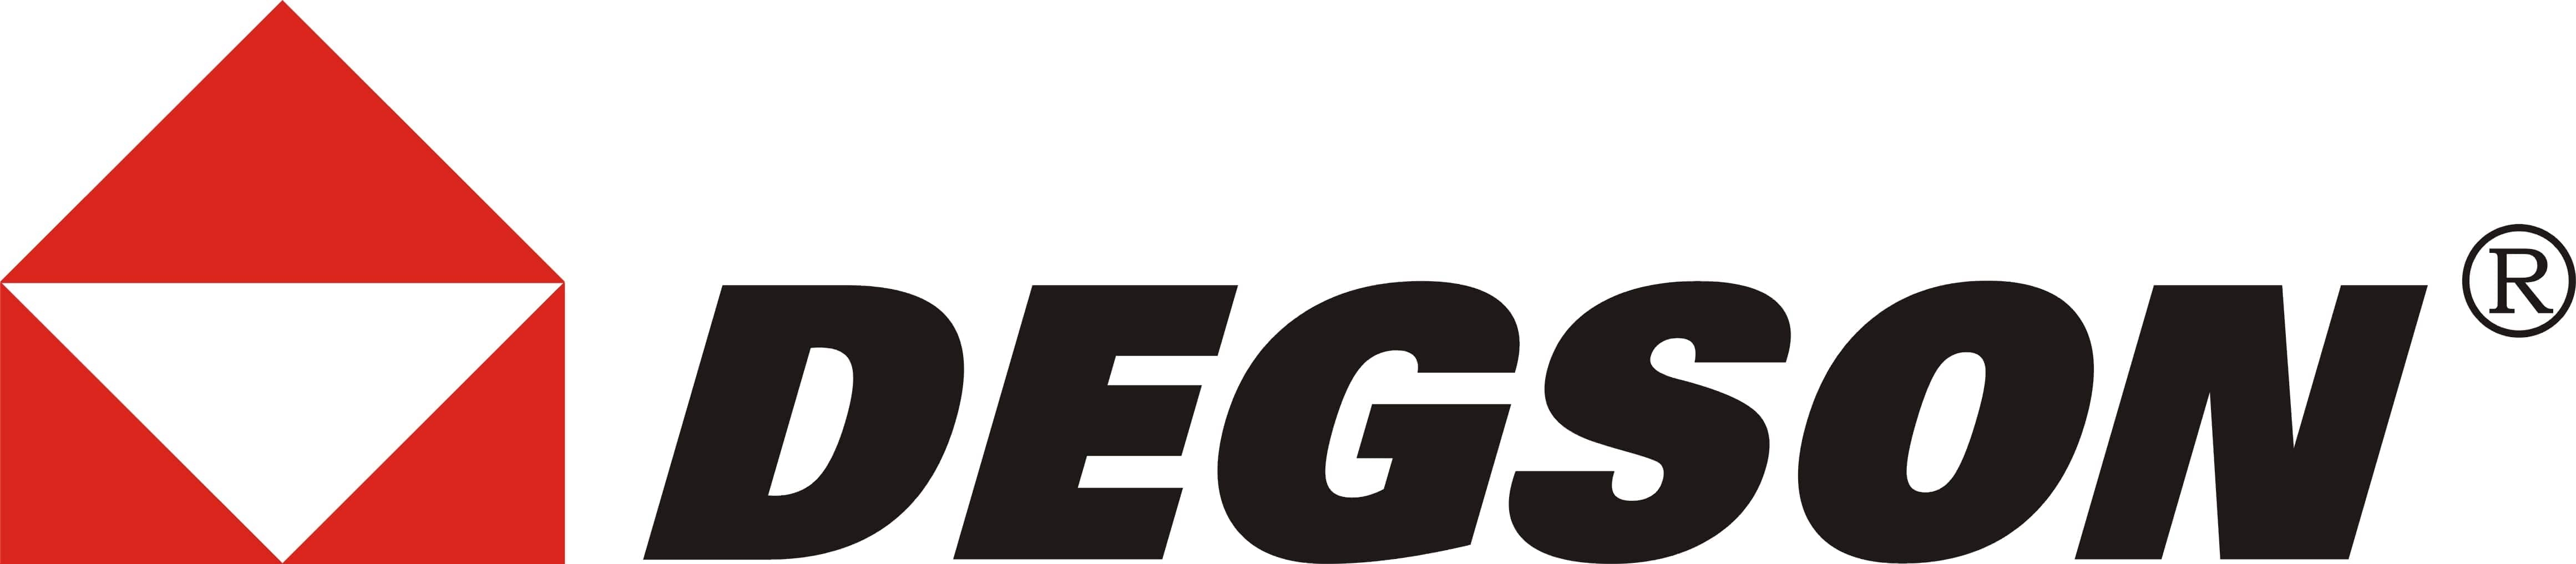 EDGKGB-7.5